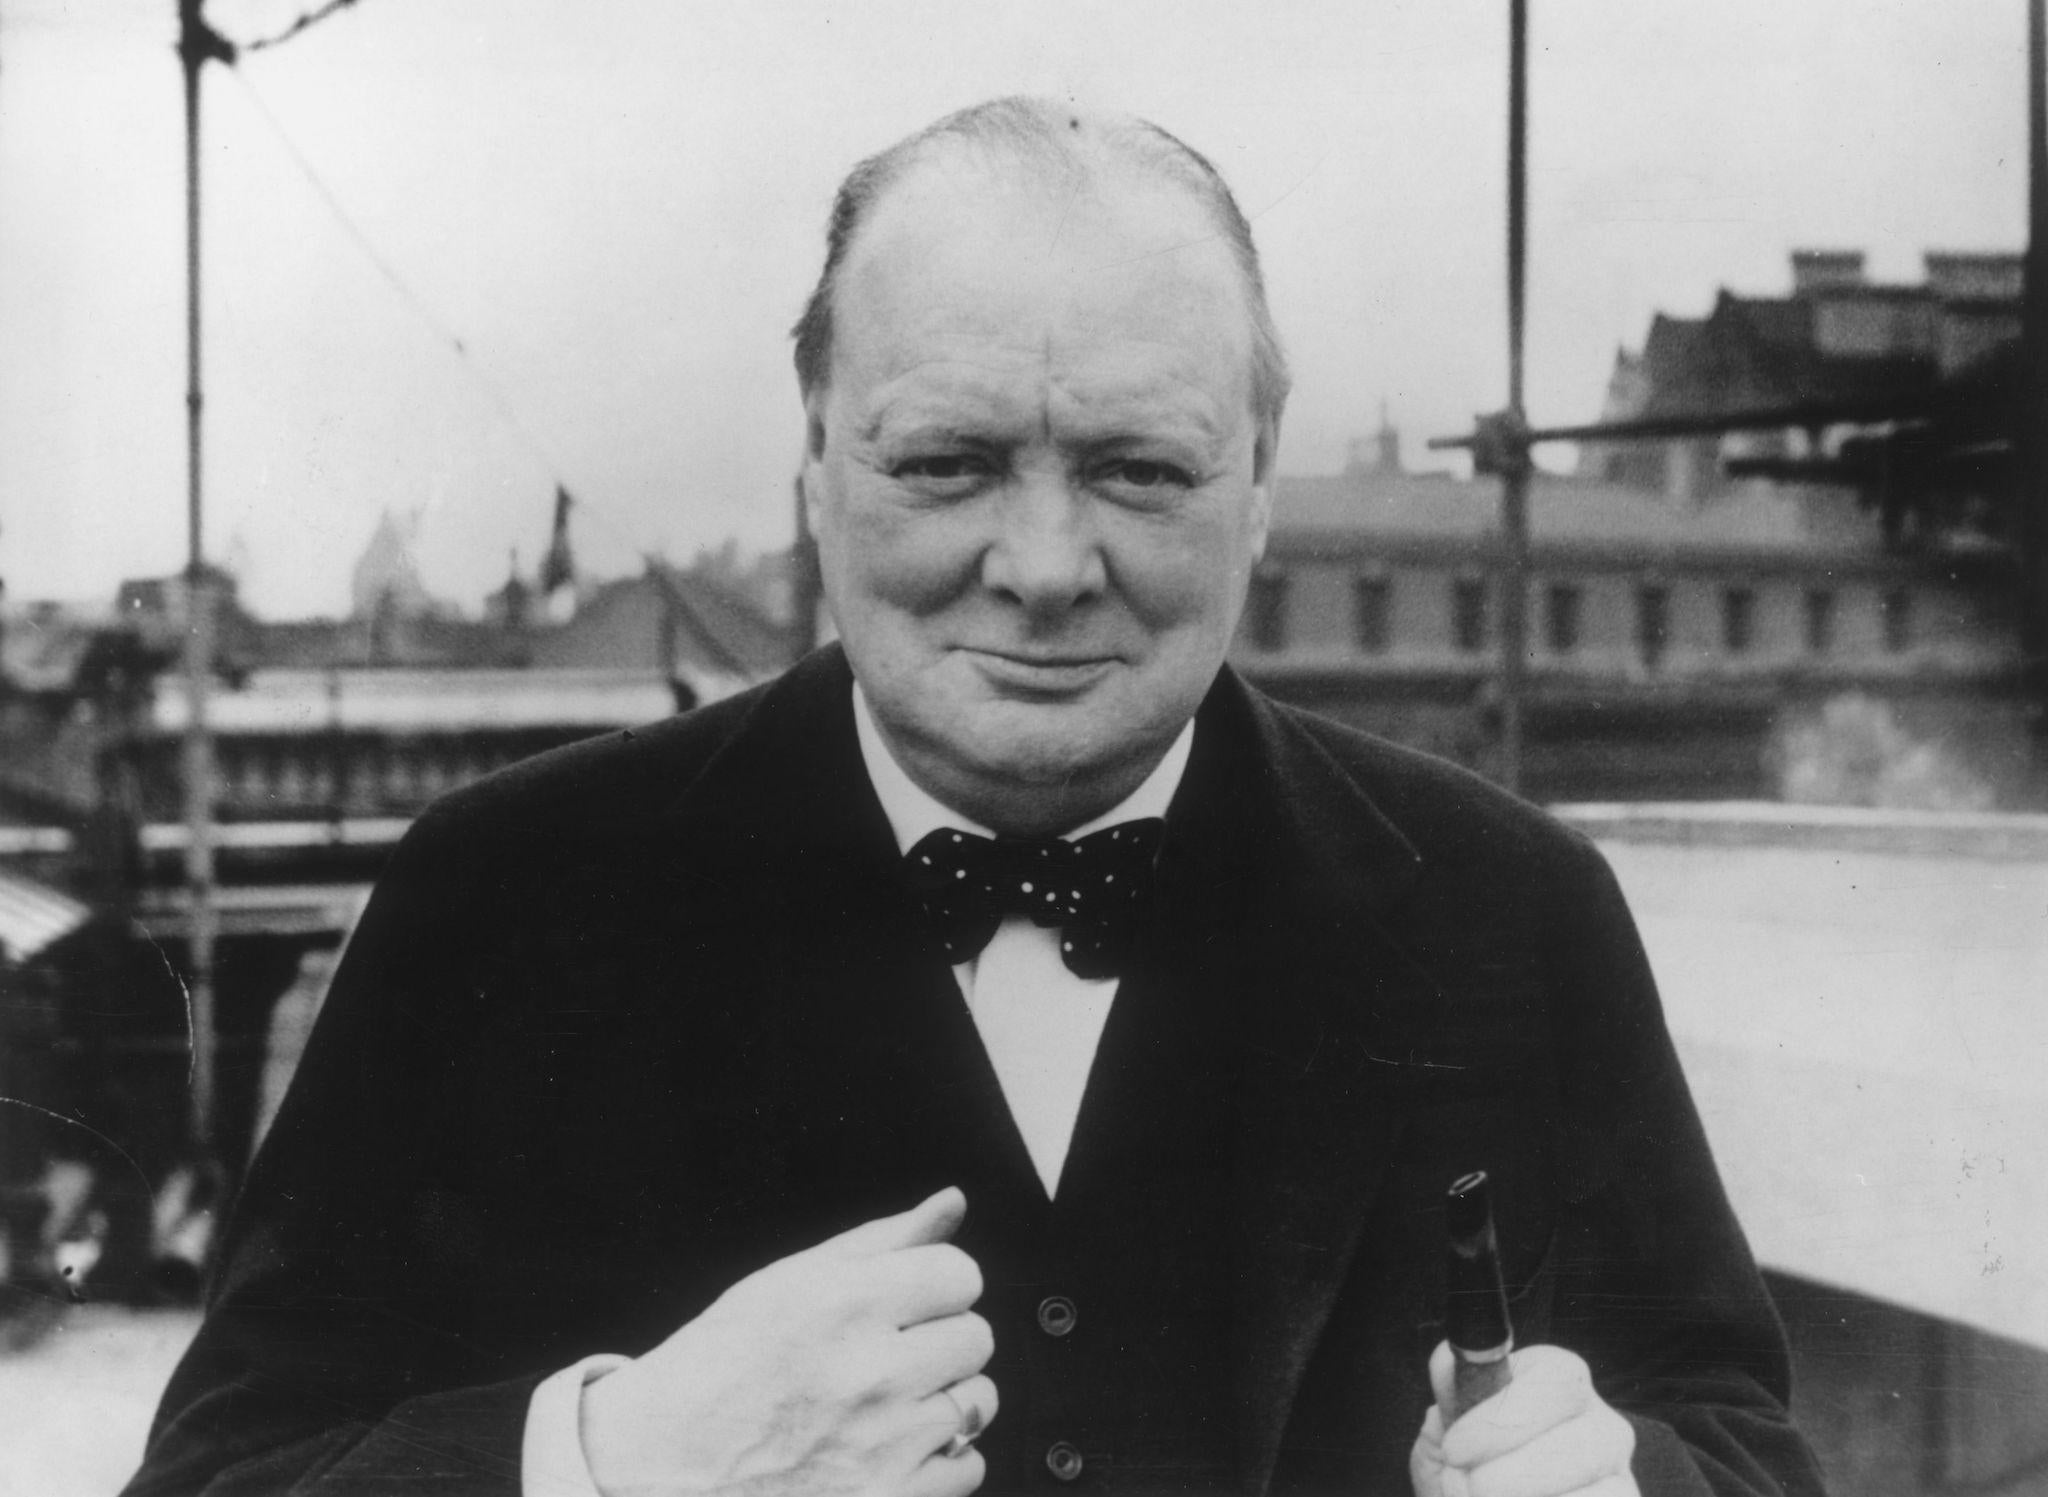 &#13;
Winston Churchill (Getty)&#13;